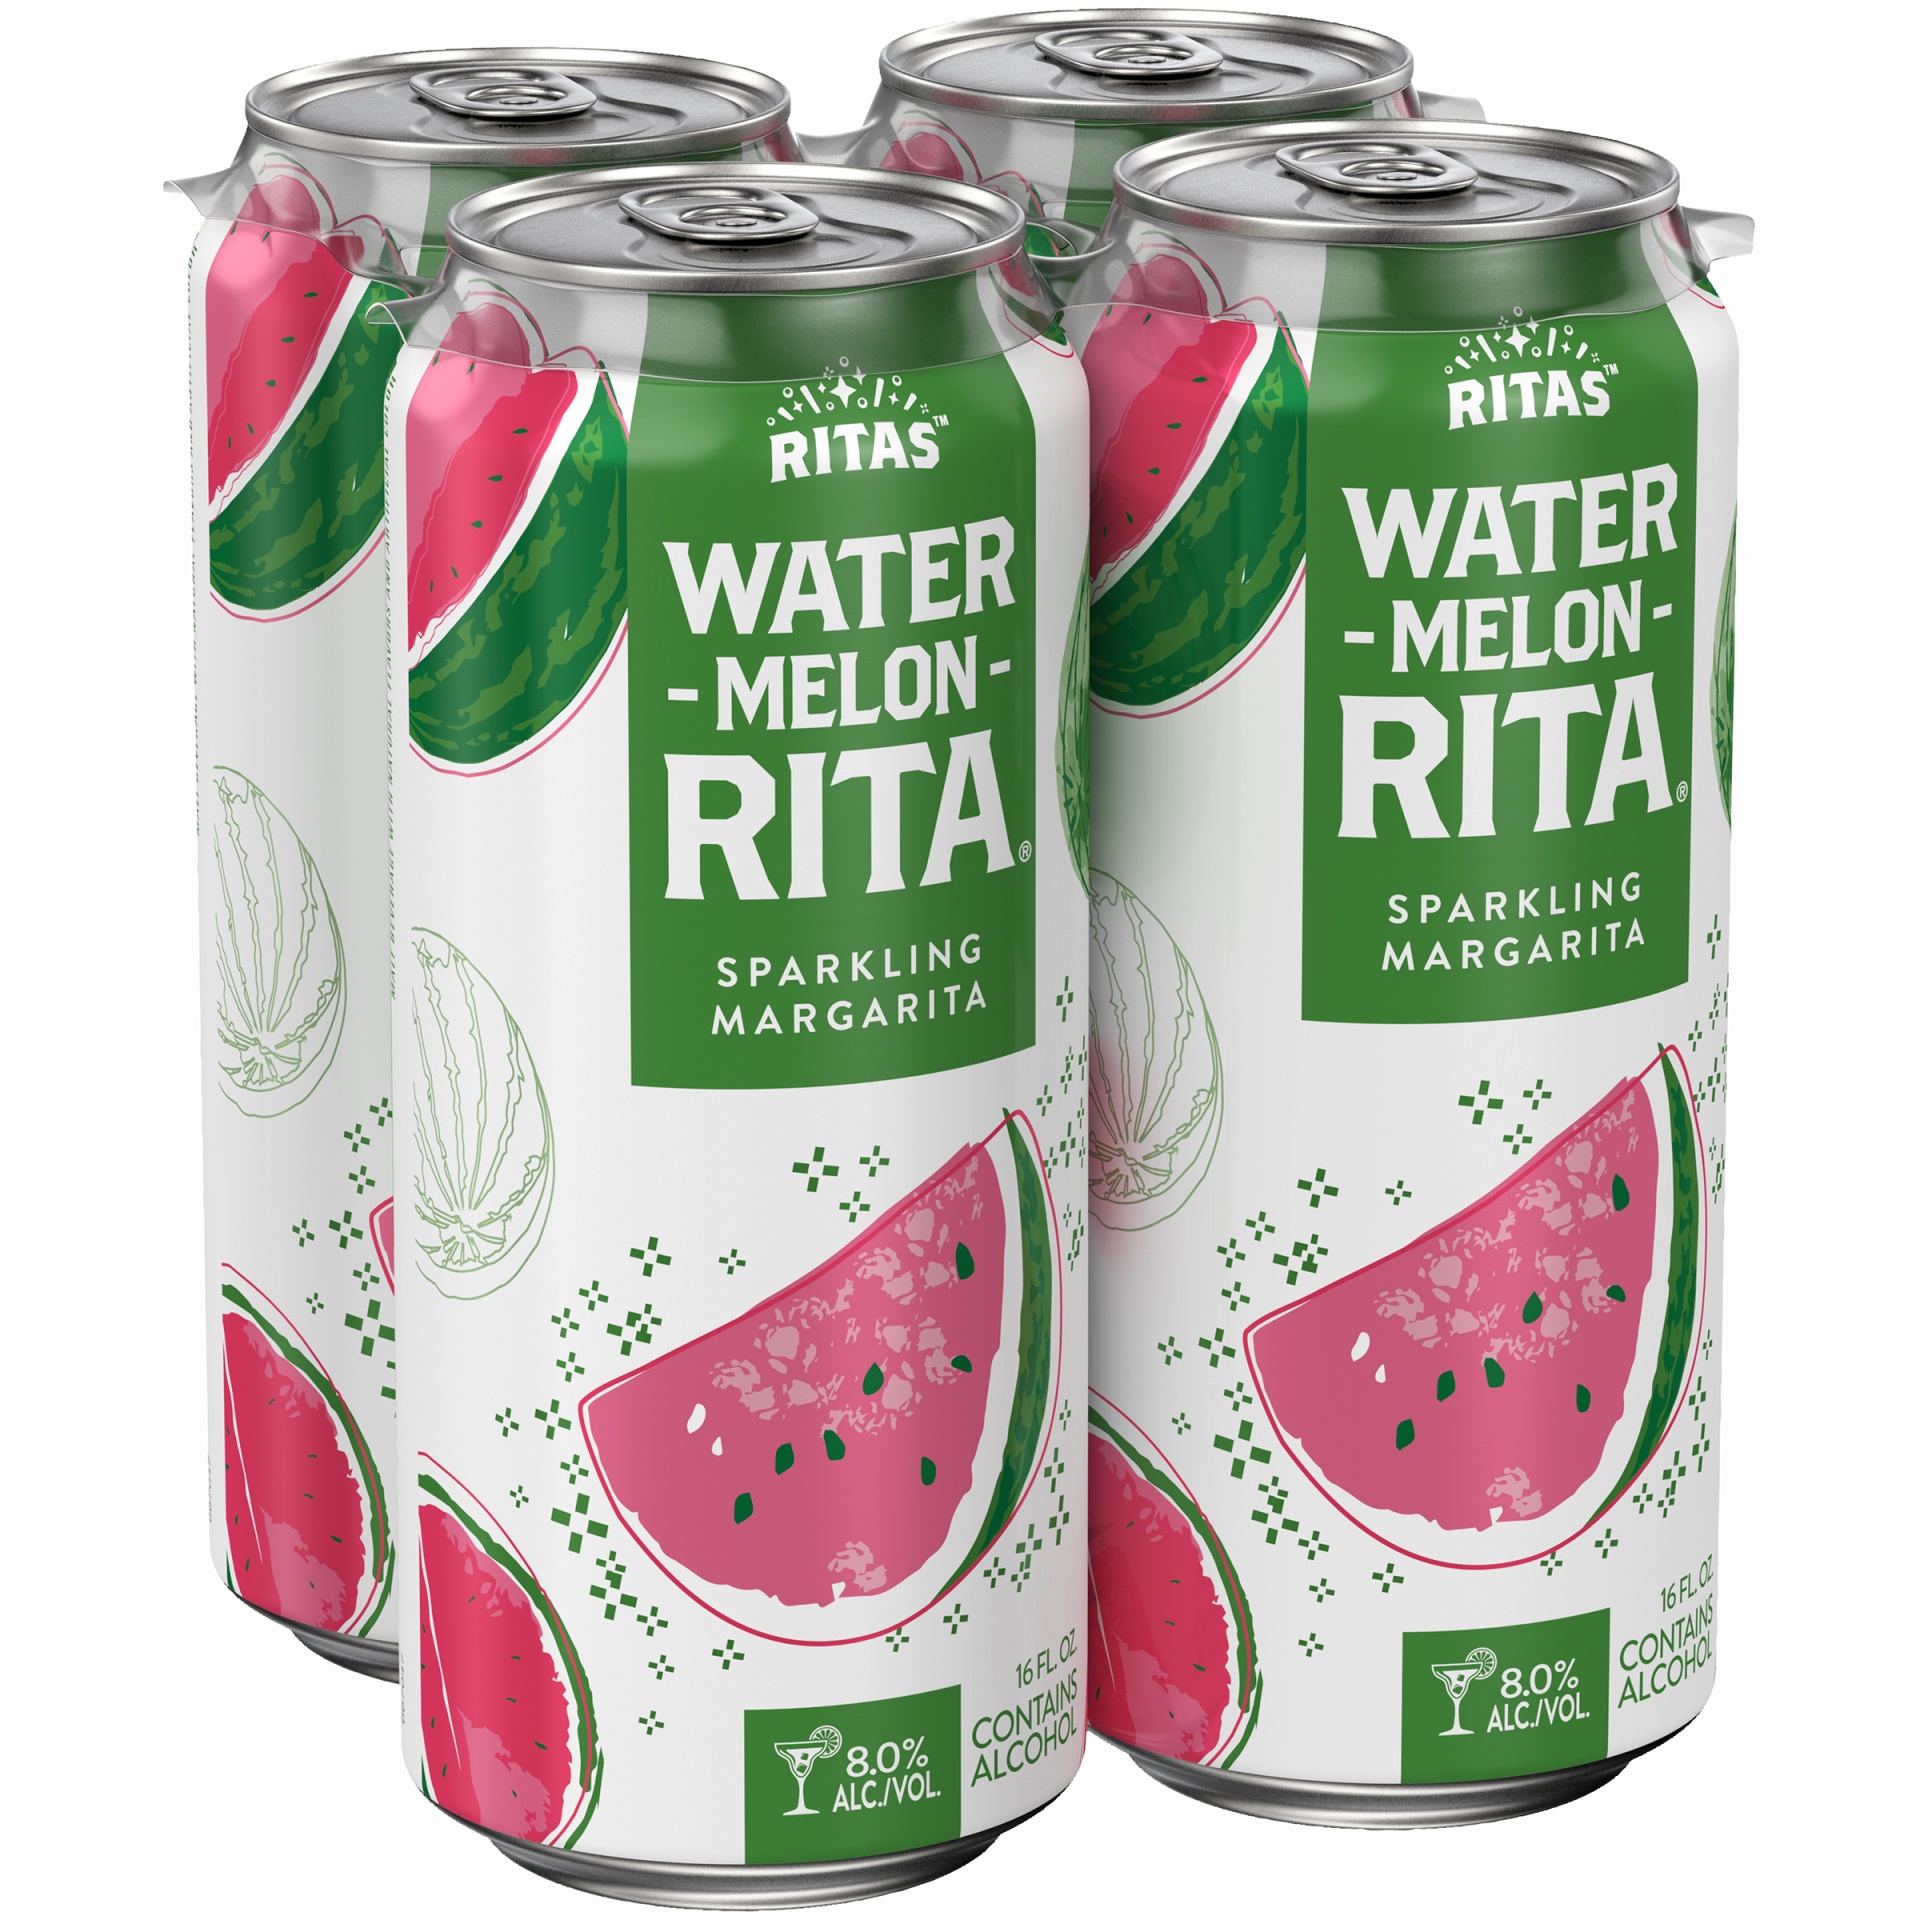 slide 1 of 3, Ritas Water-Melon-Rita Sparkling Margarita, 8% ABV, 16 oz cans